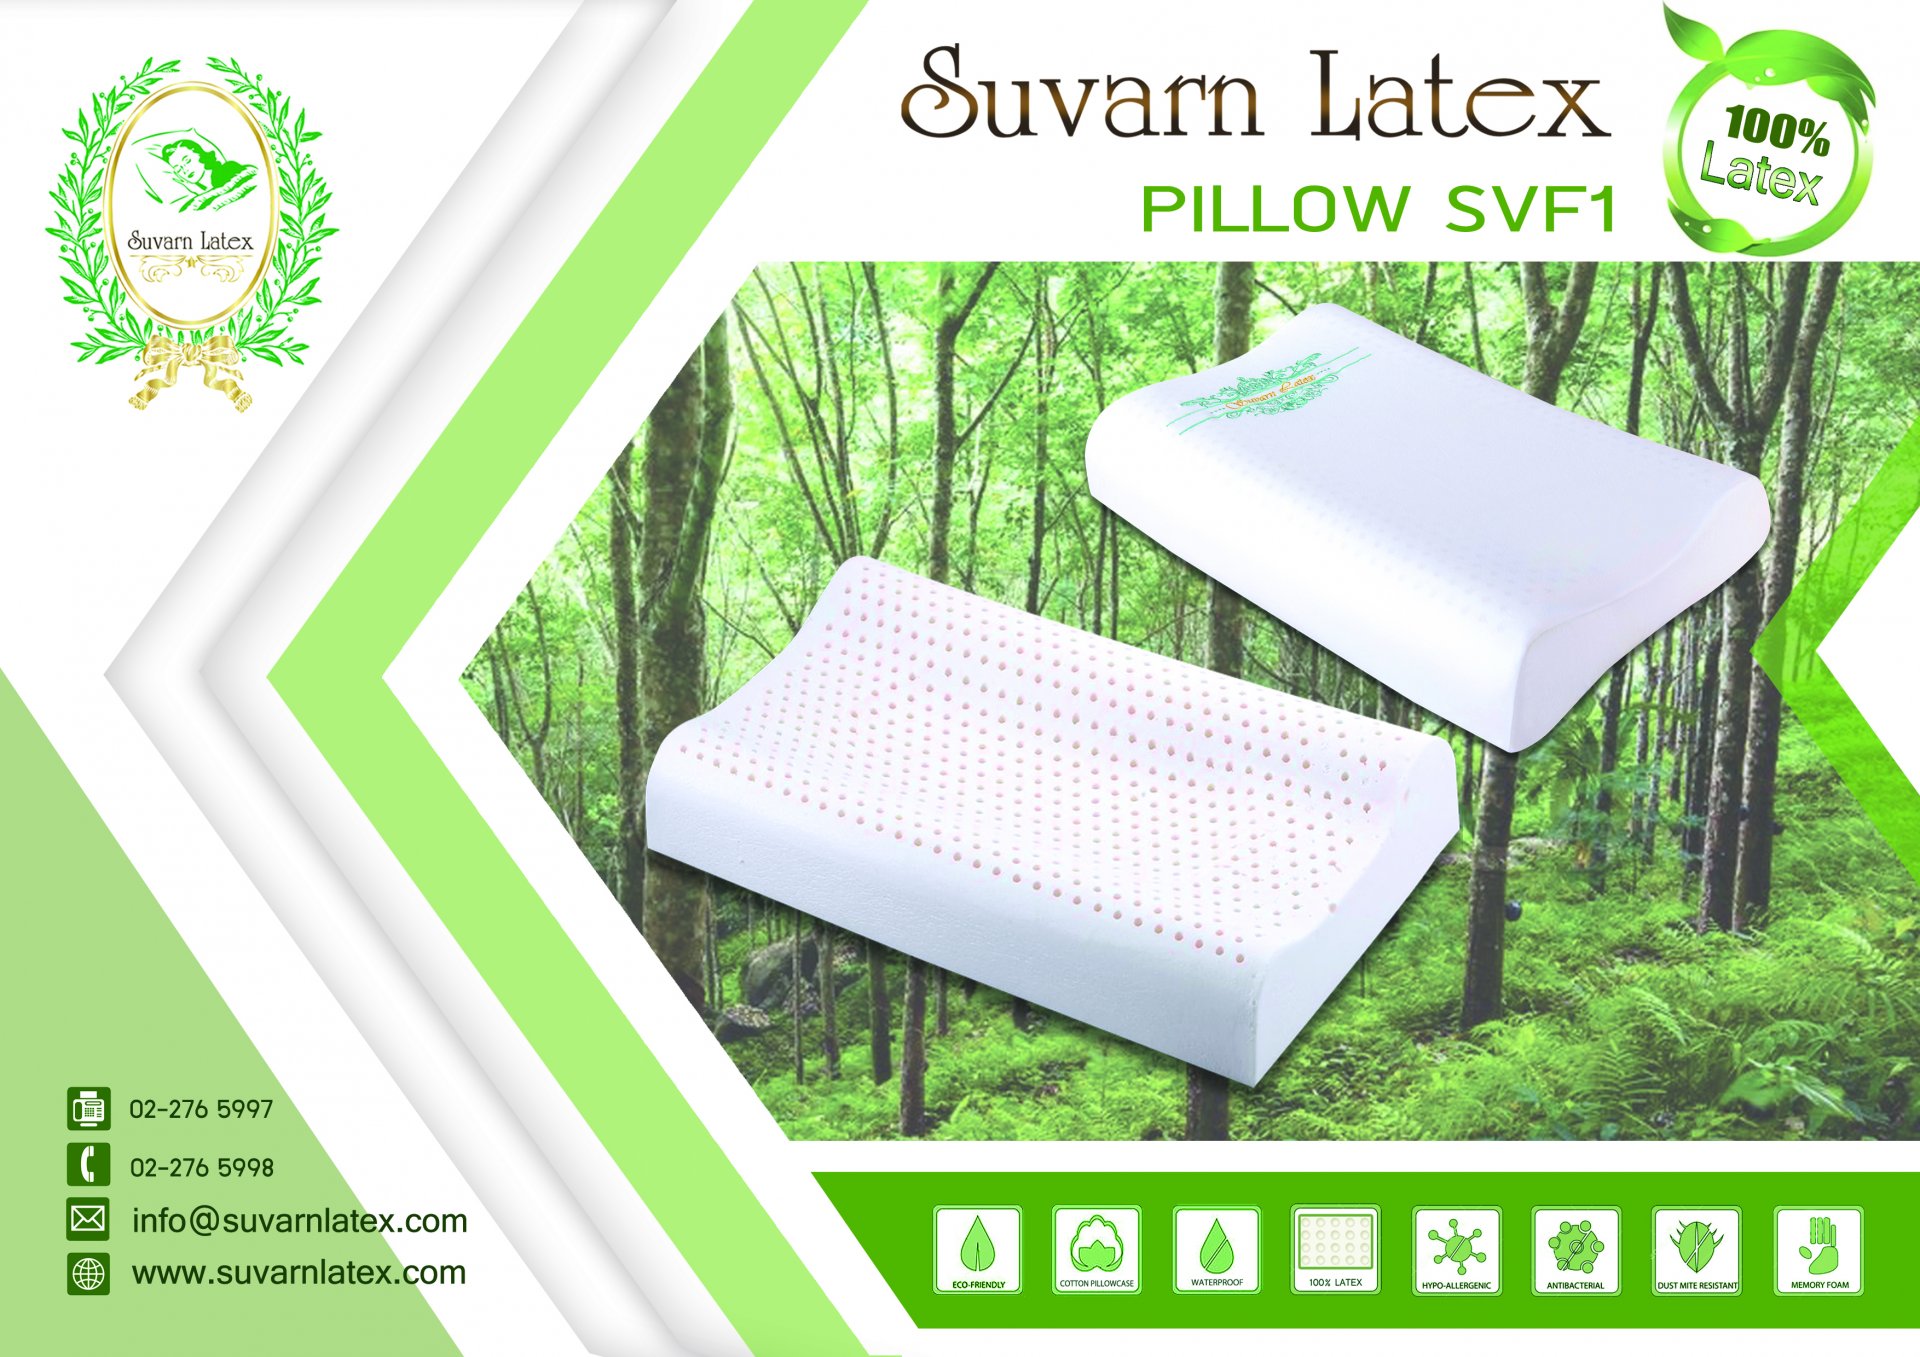 Suvarn latex pillow 4